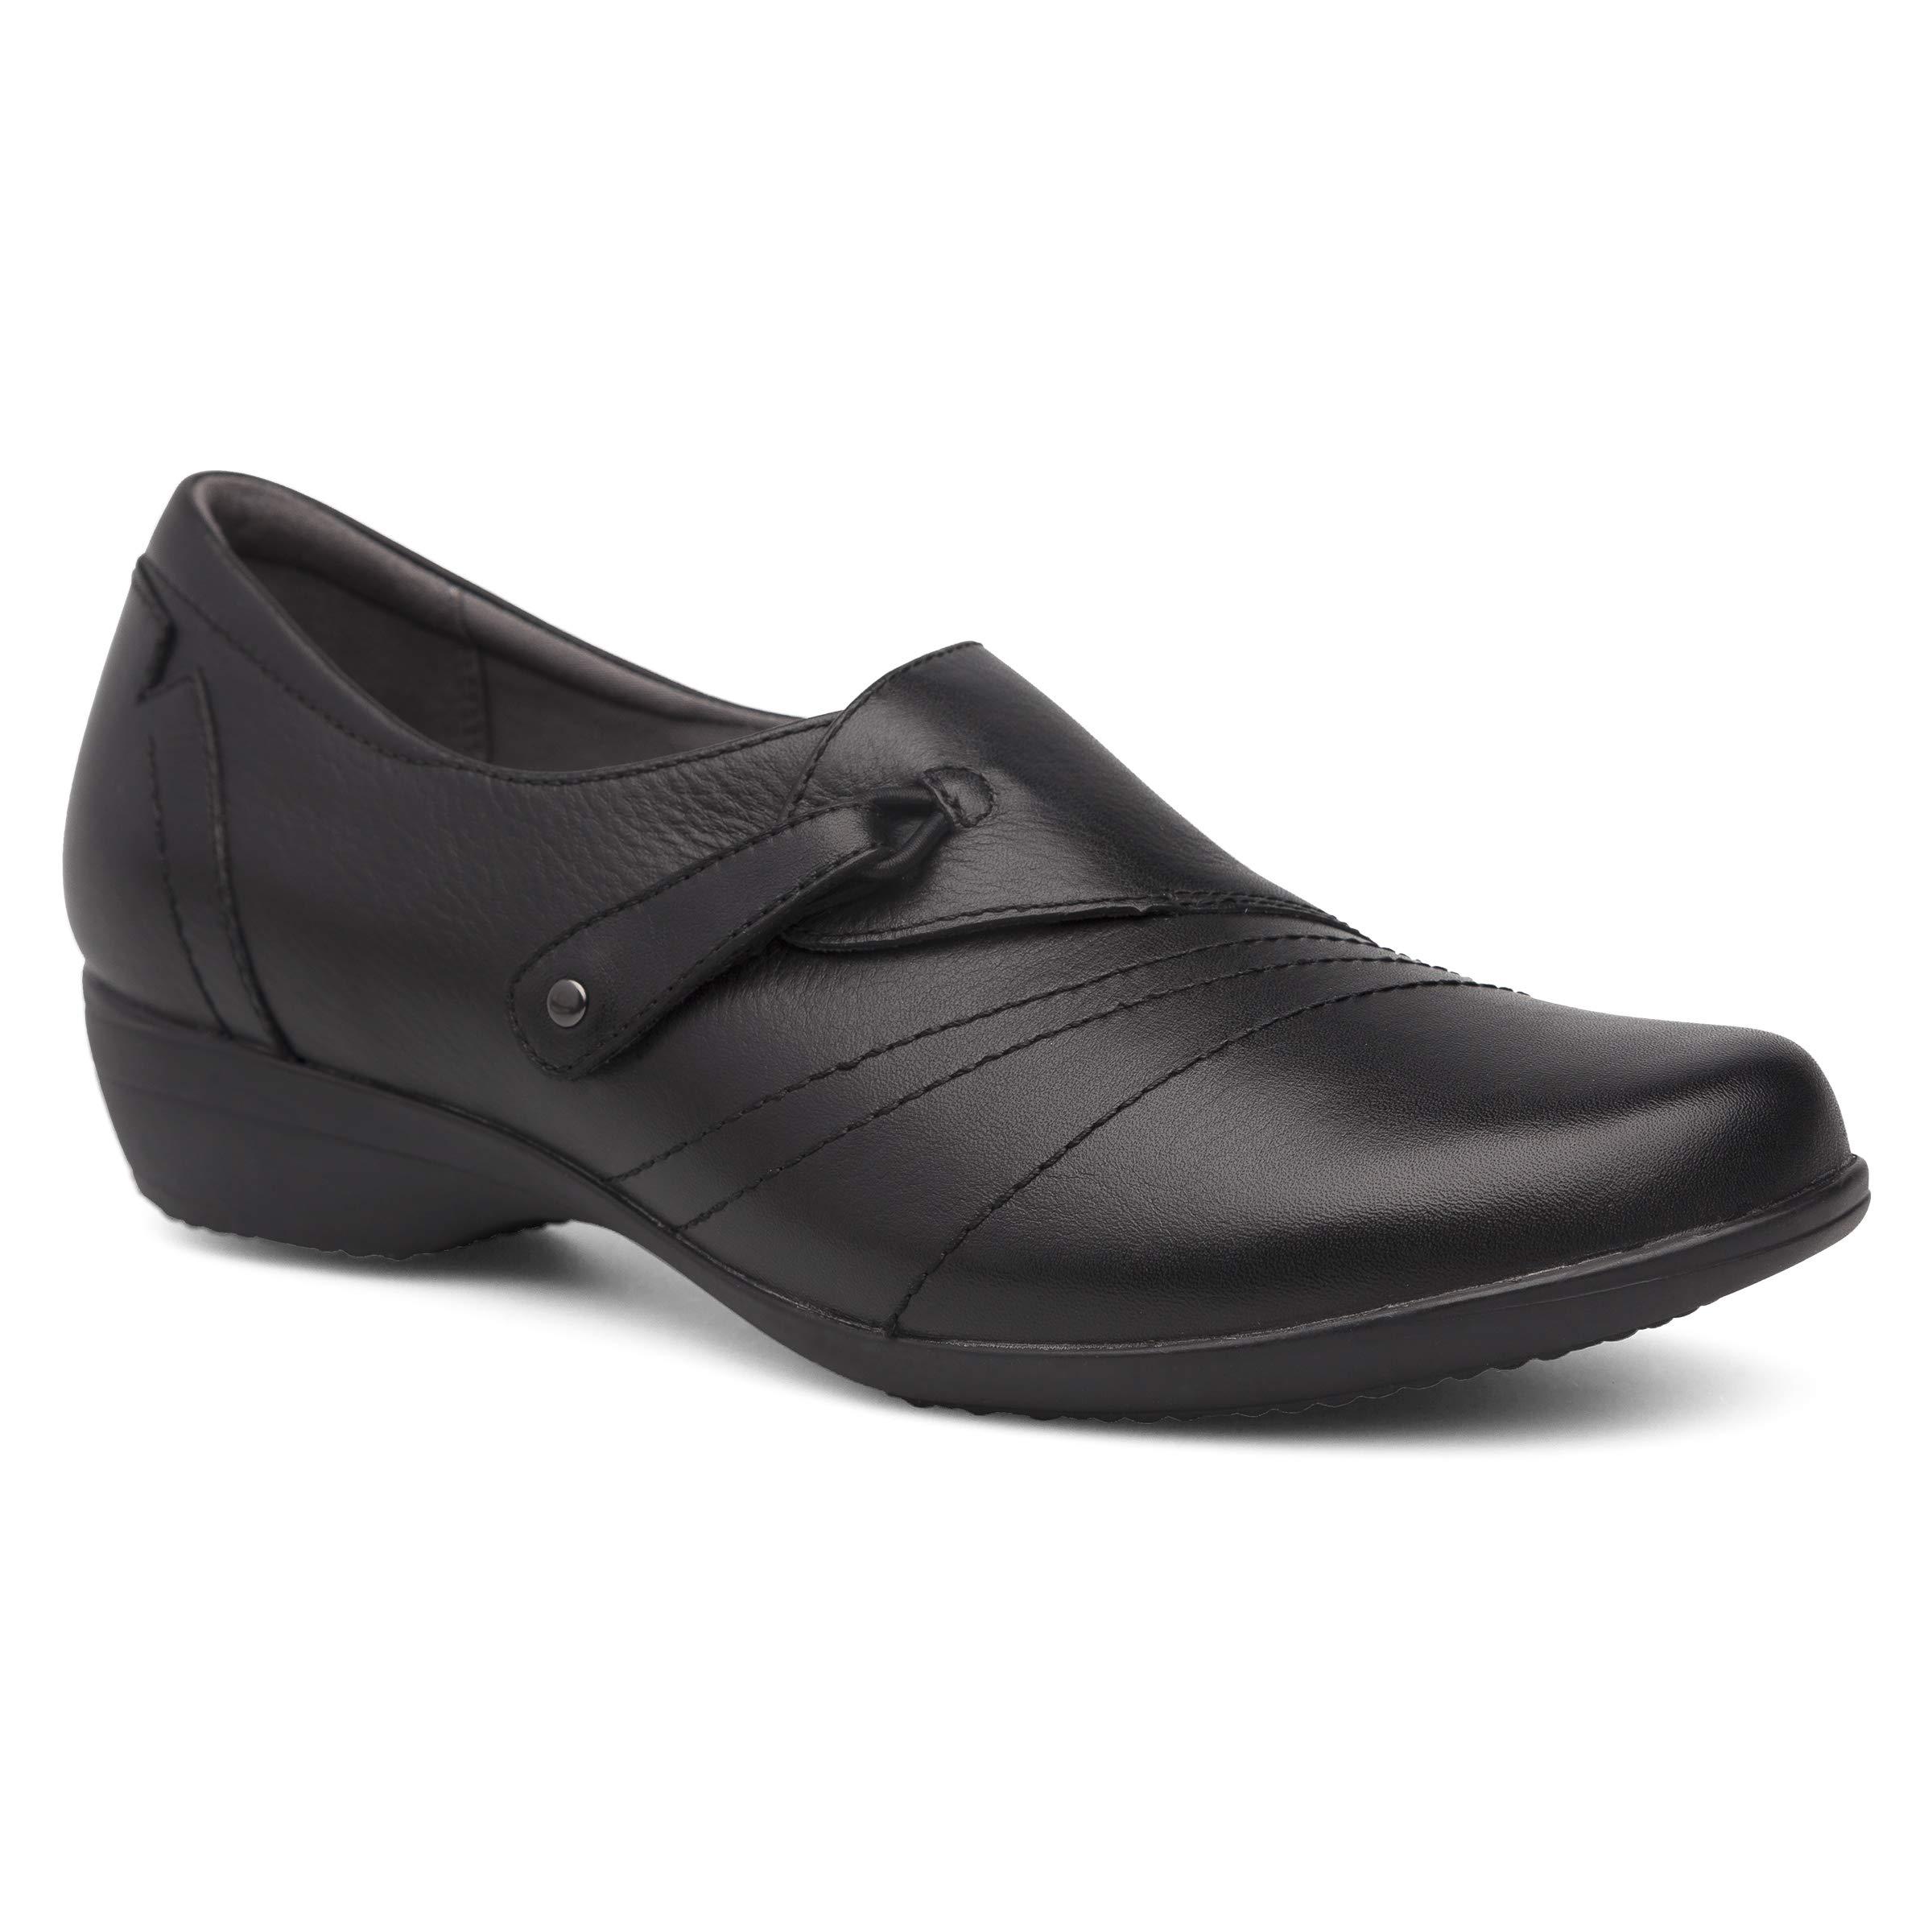 Dansko Rubber Franny Comfort Shoe in Black - Save 55% - Lyst